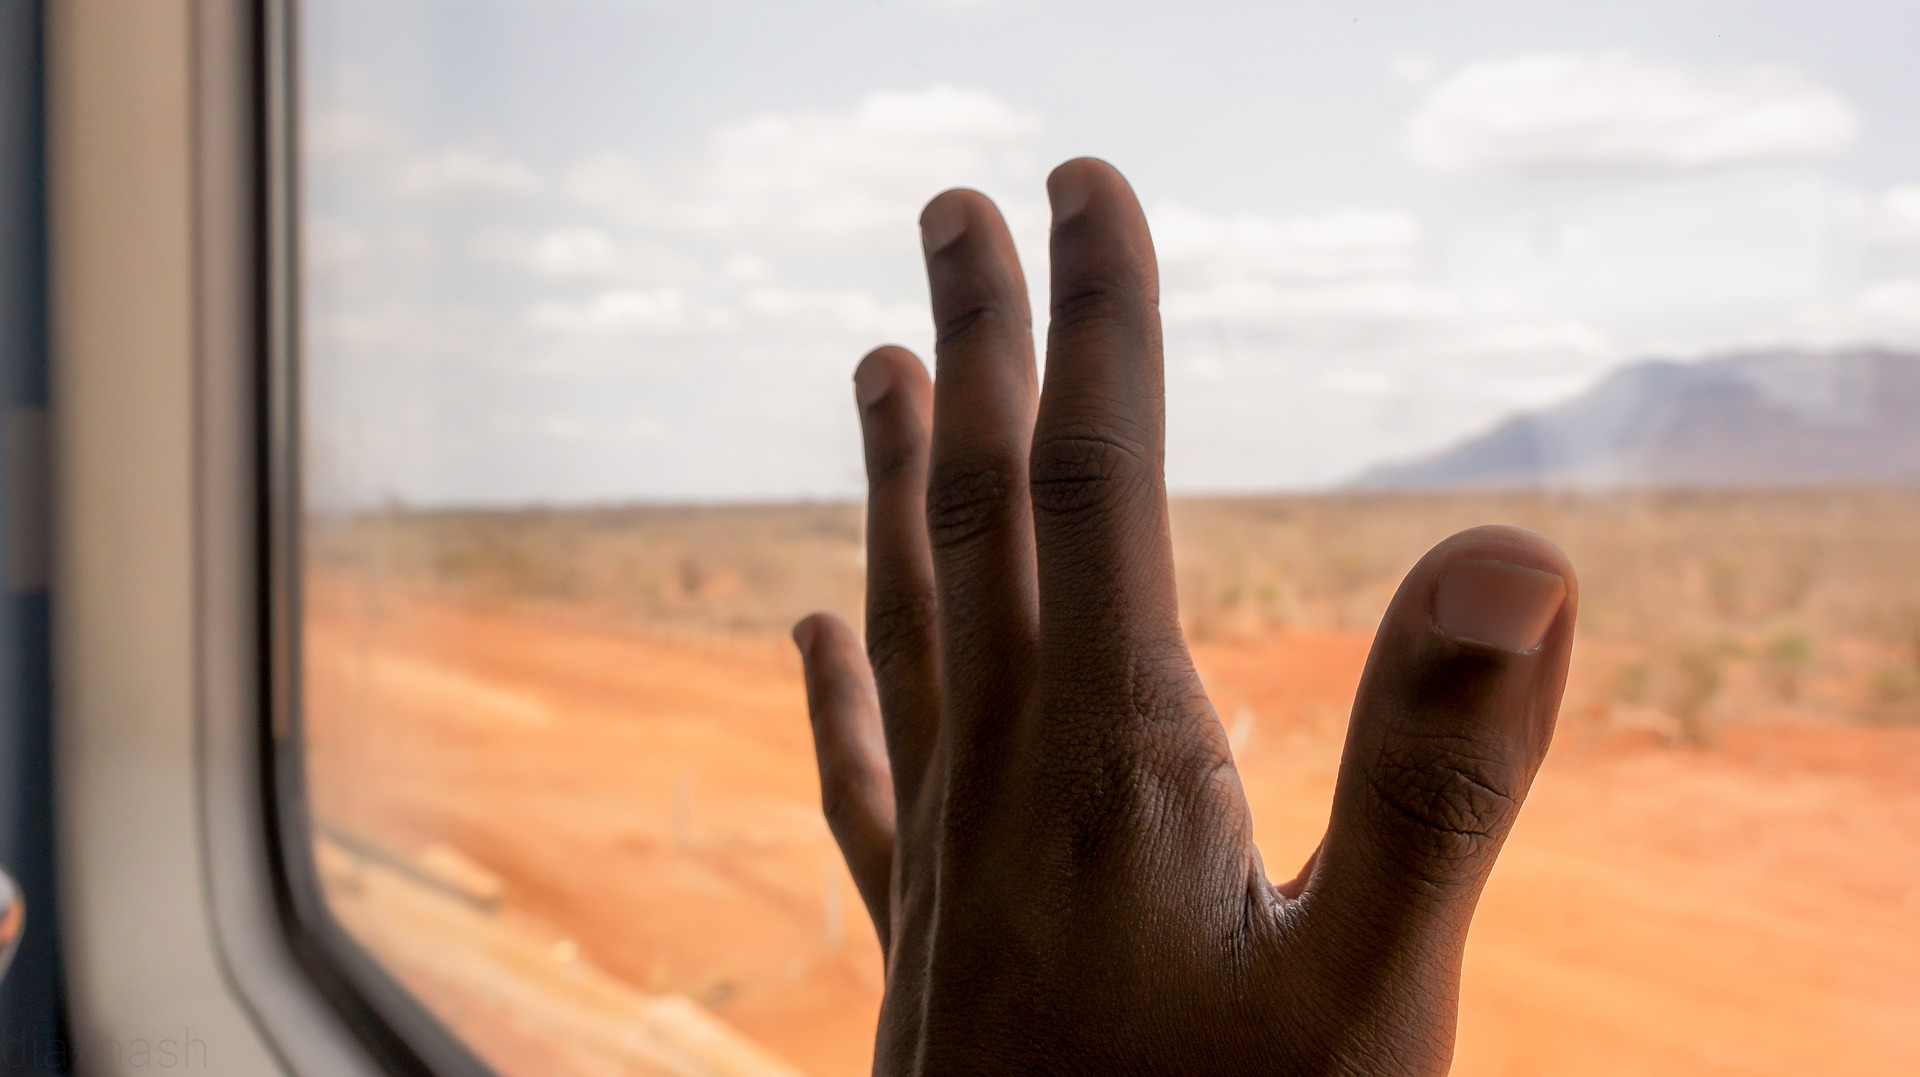 Una mano toca el vidrio de la ventana de un tren; al fondo se oberva un paisaje.